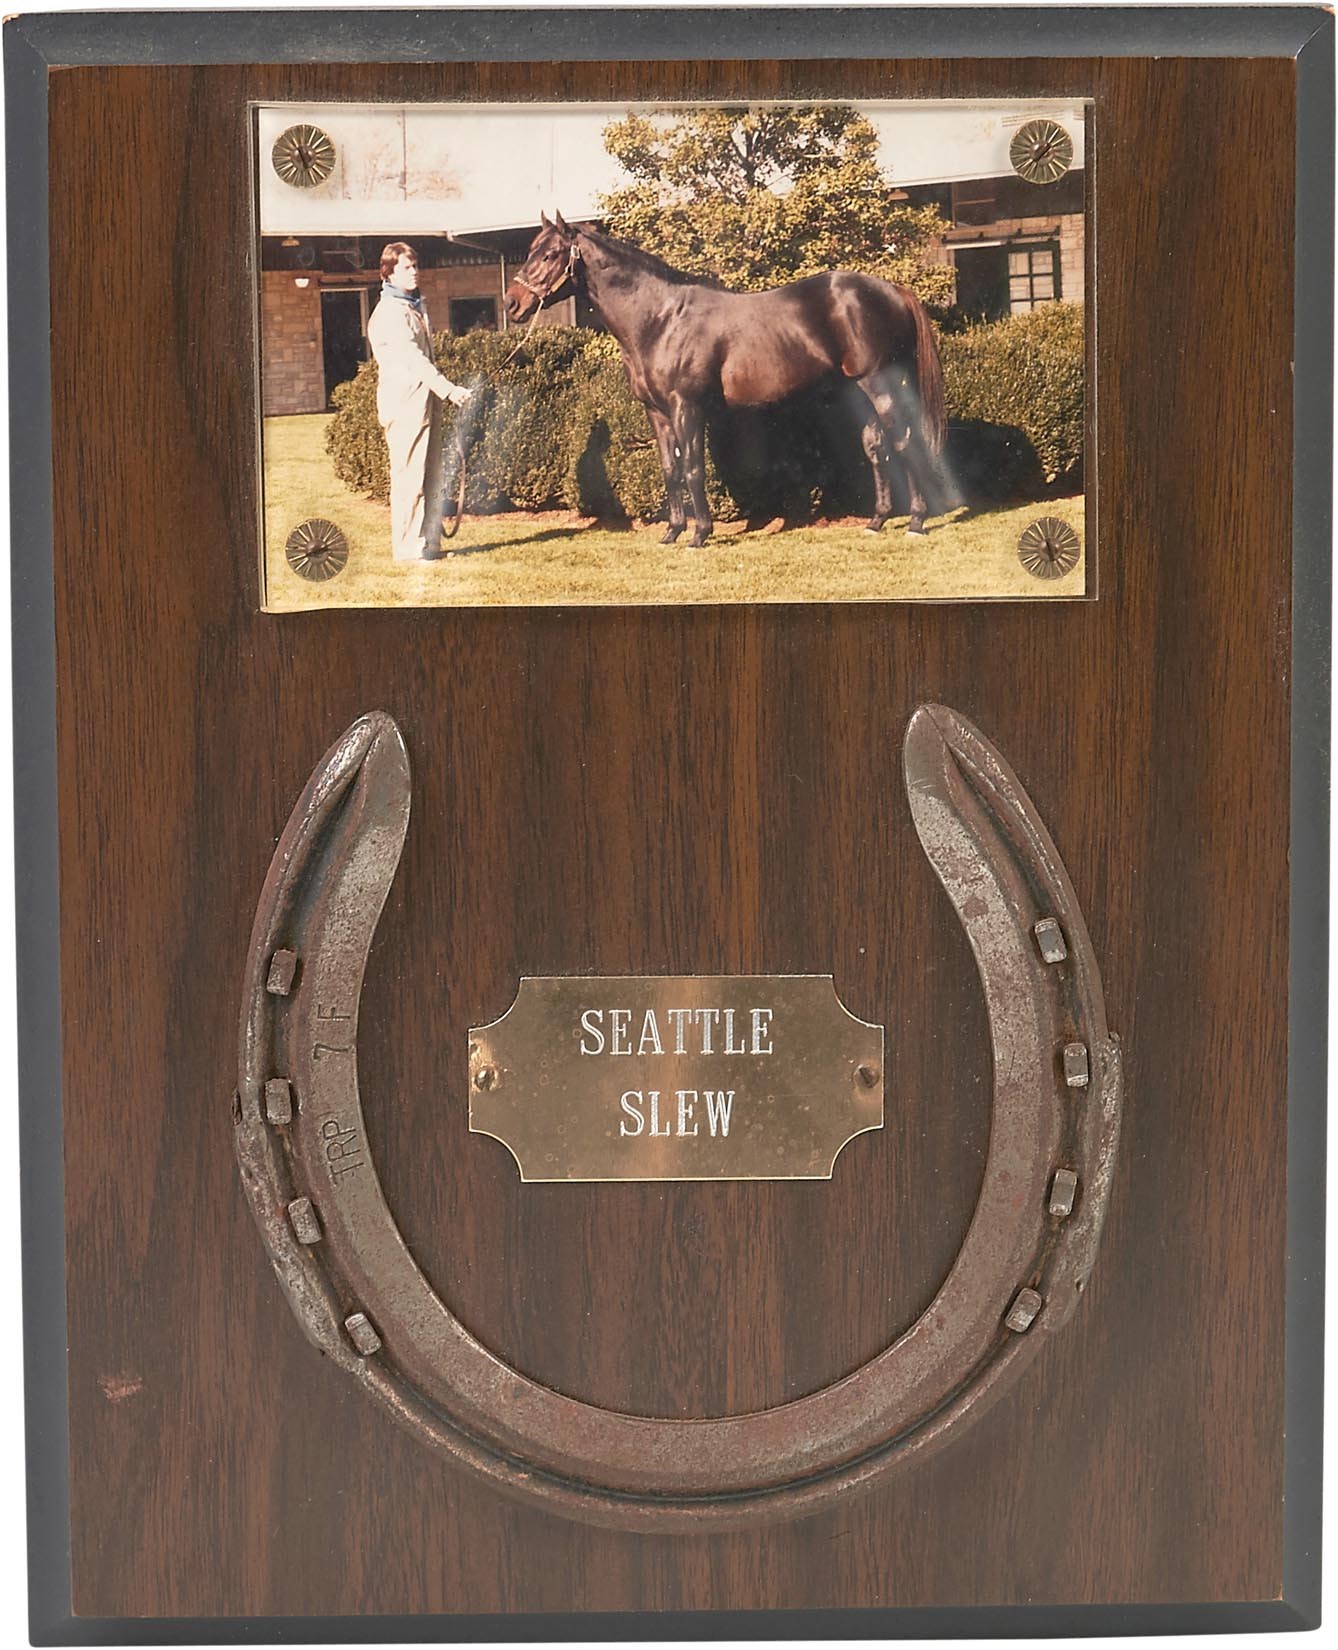 Horse Racing - 1984 Seattle Slew Worn Horseshoe - from Spendthrift Farm Groomsman (LOA)